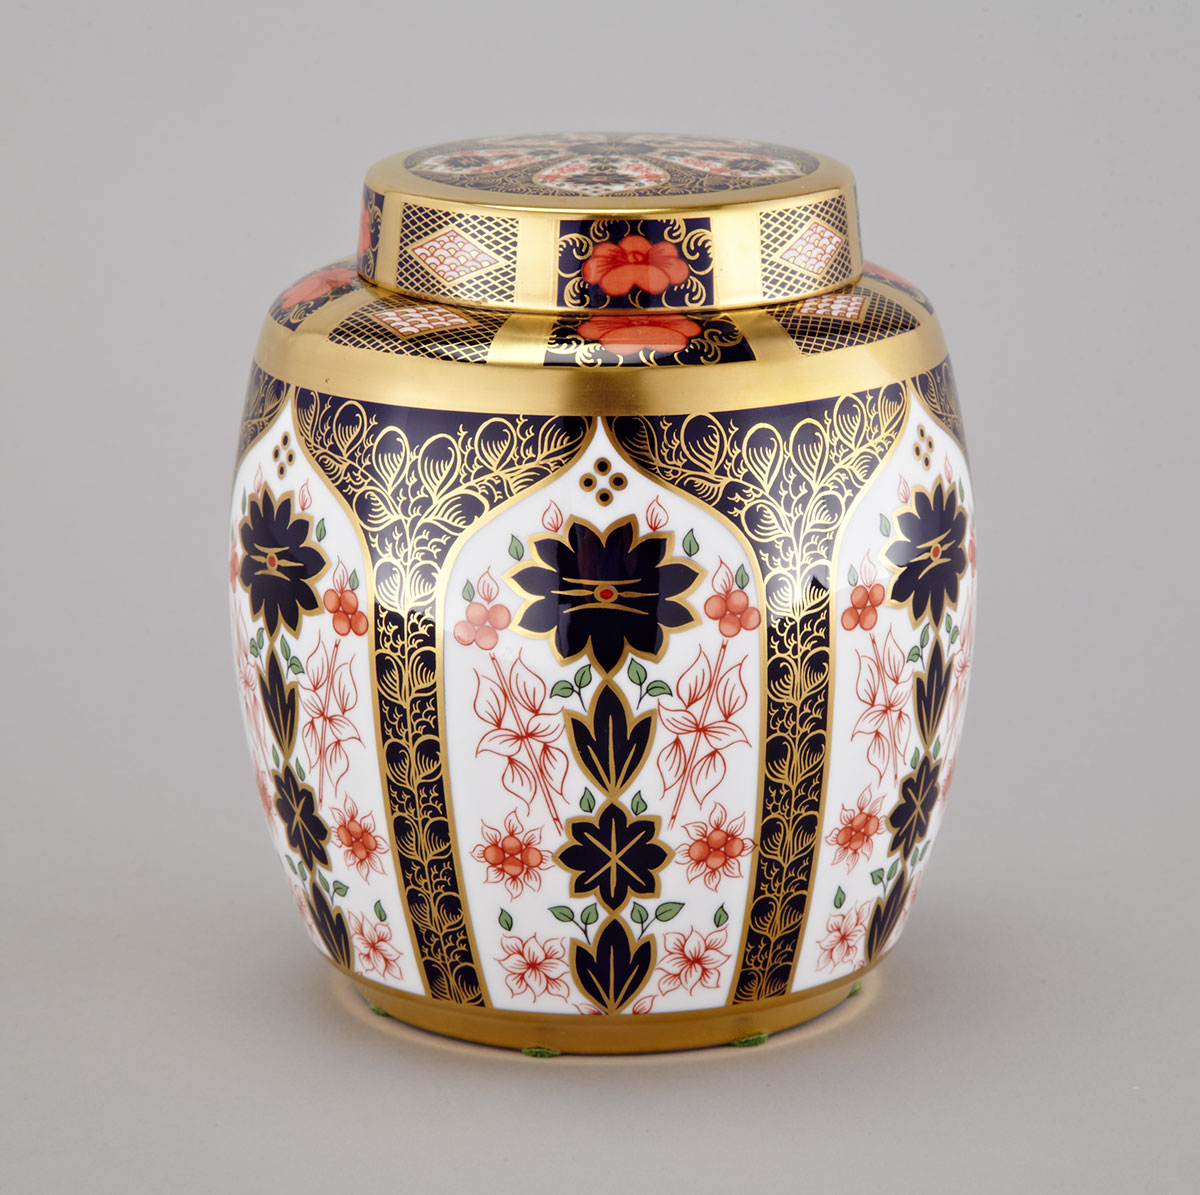 Royal Crown Derby ‘Old Imari’ (1128) Pattern Covered Jar, 1989